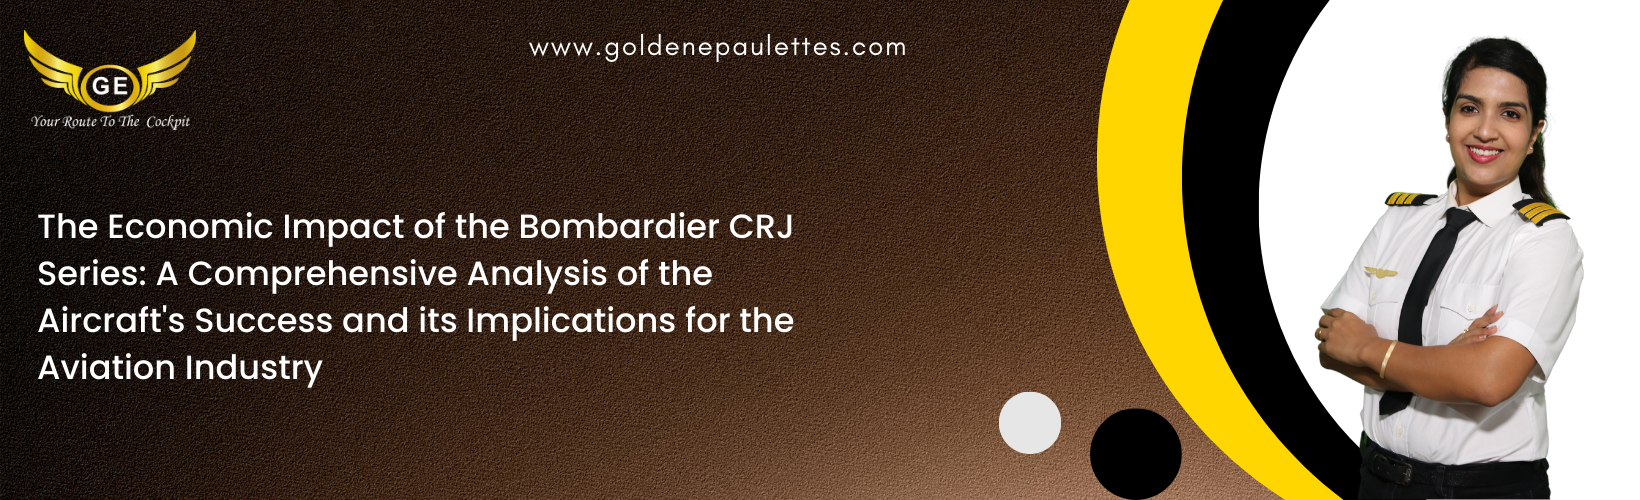 4.The Economic Impact of the Bombardier CRJ Series